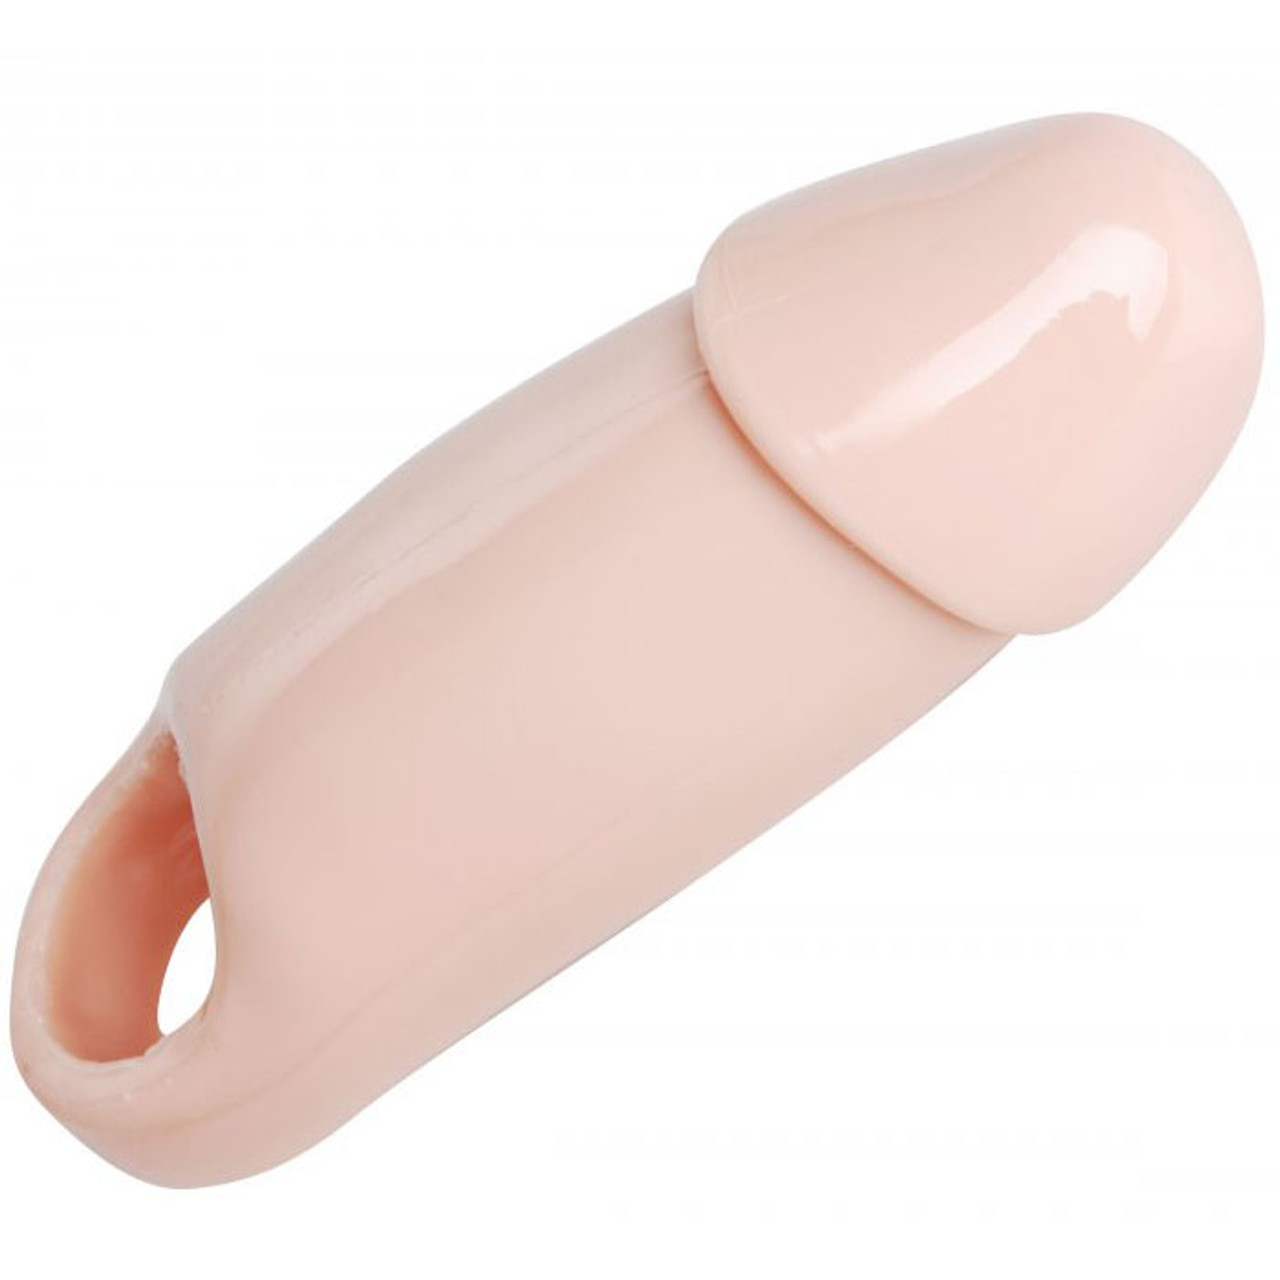 Size Matters Really Ample Wide Penis Sheath Flesh - Dallas Novelty